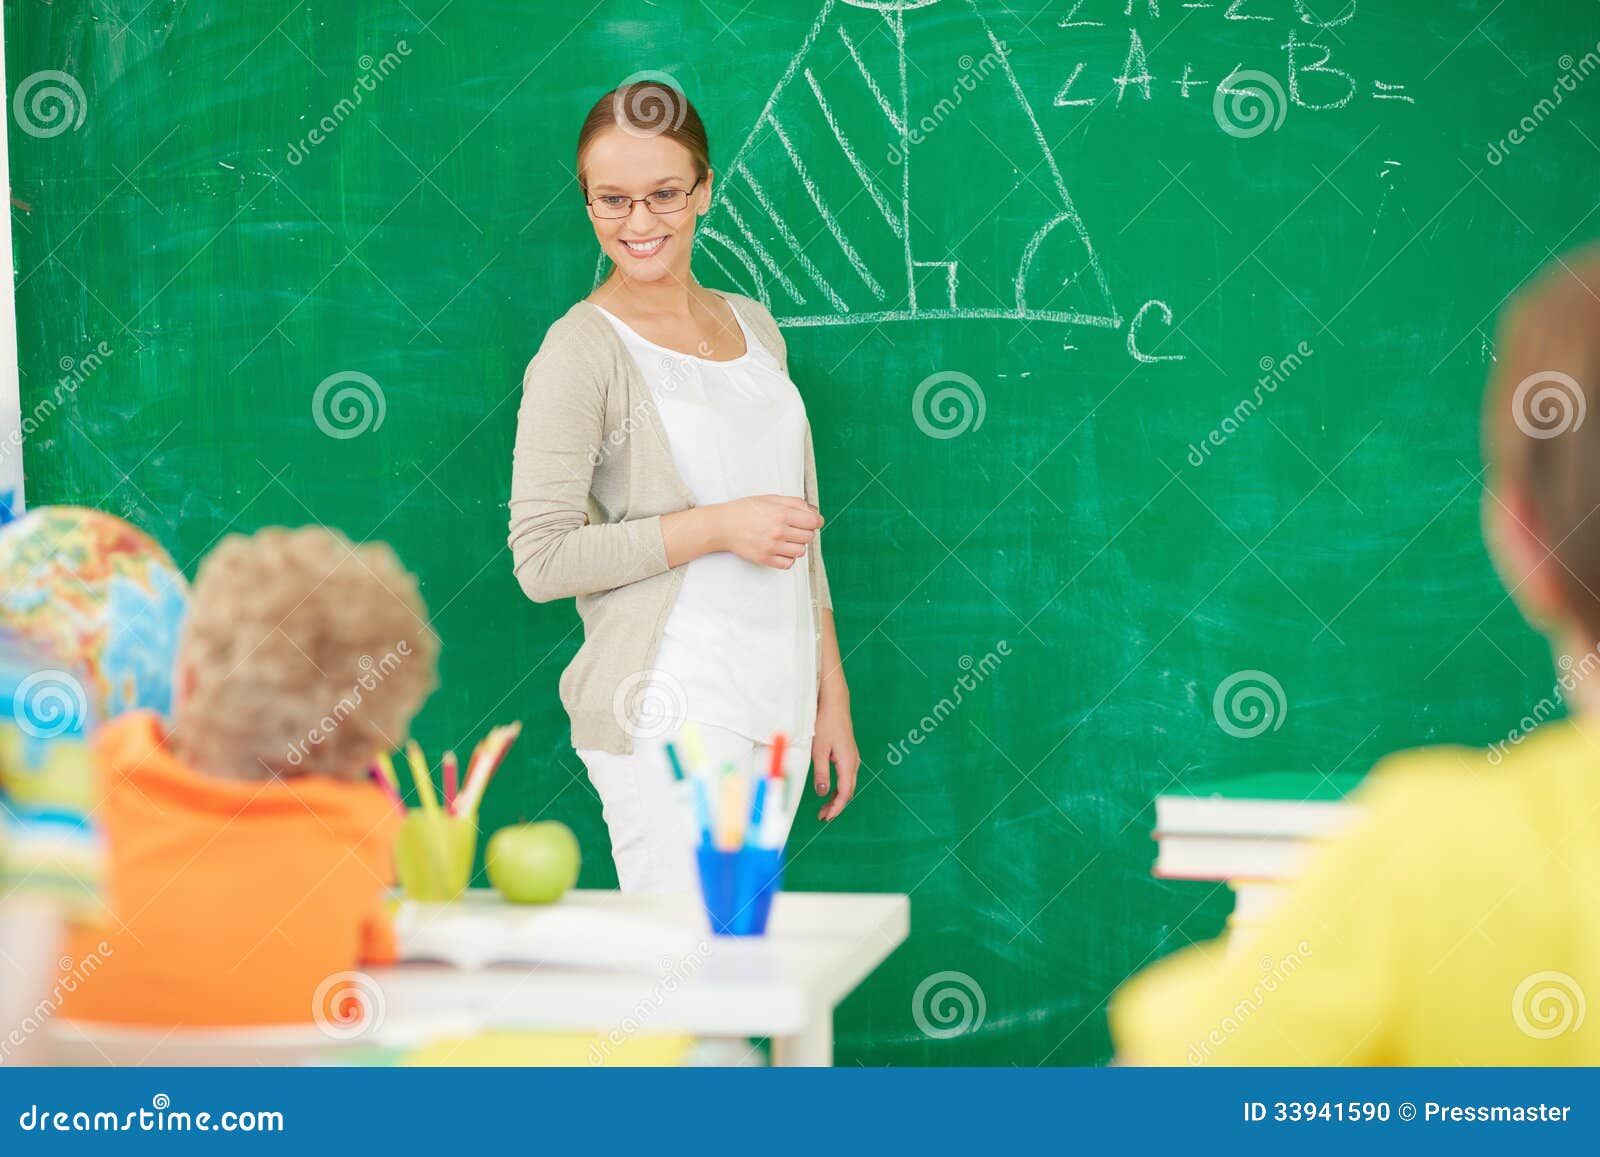 Забеременела от учителя. Беременные учительницы. Училка беременна.